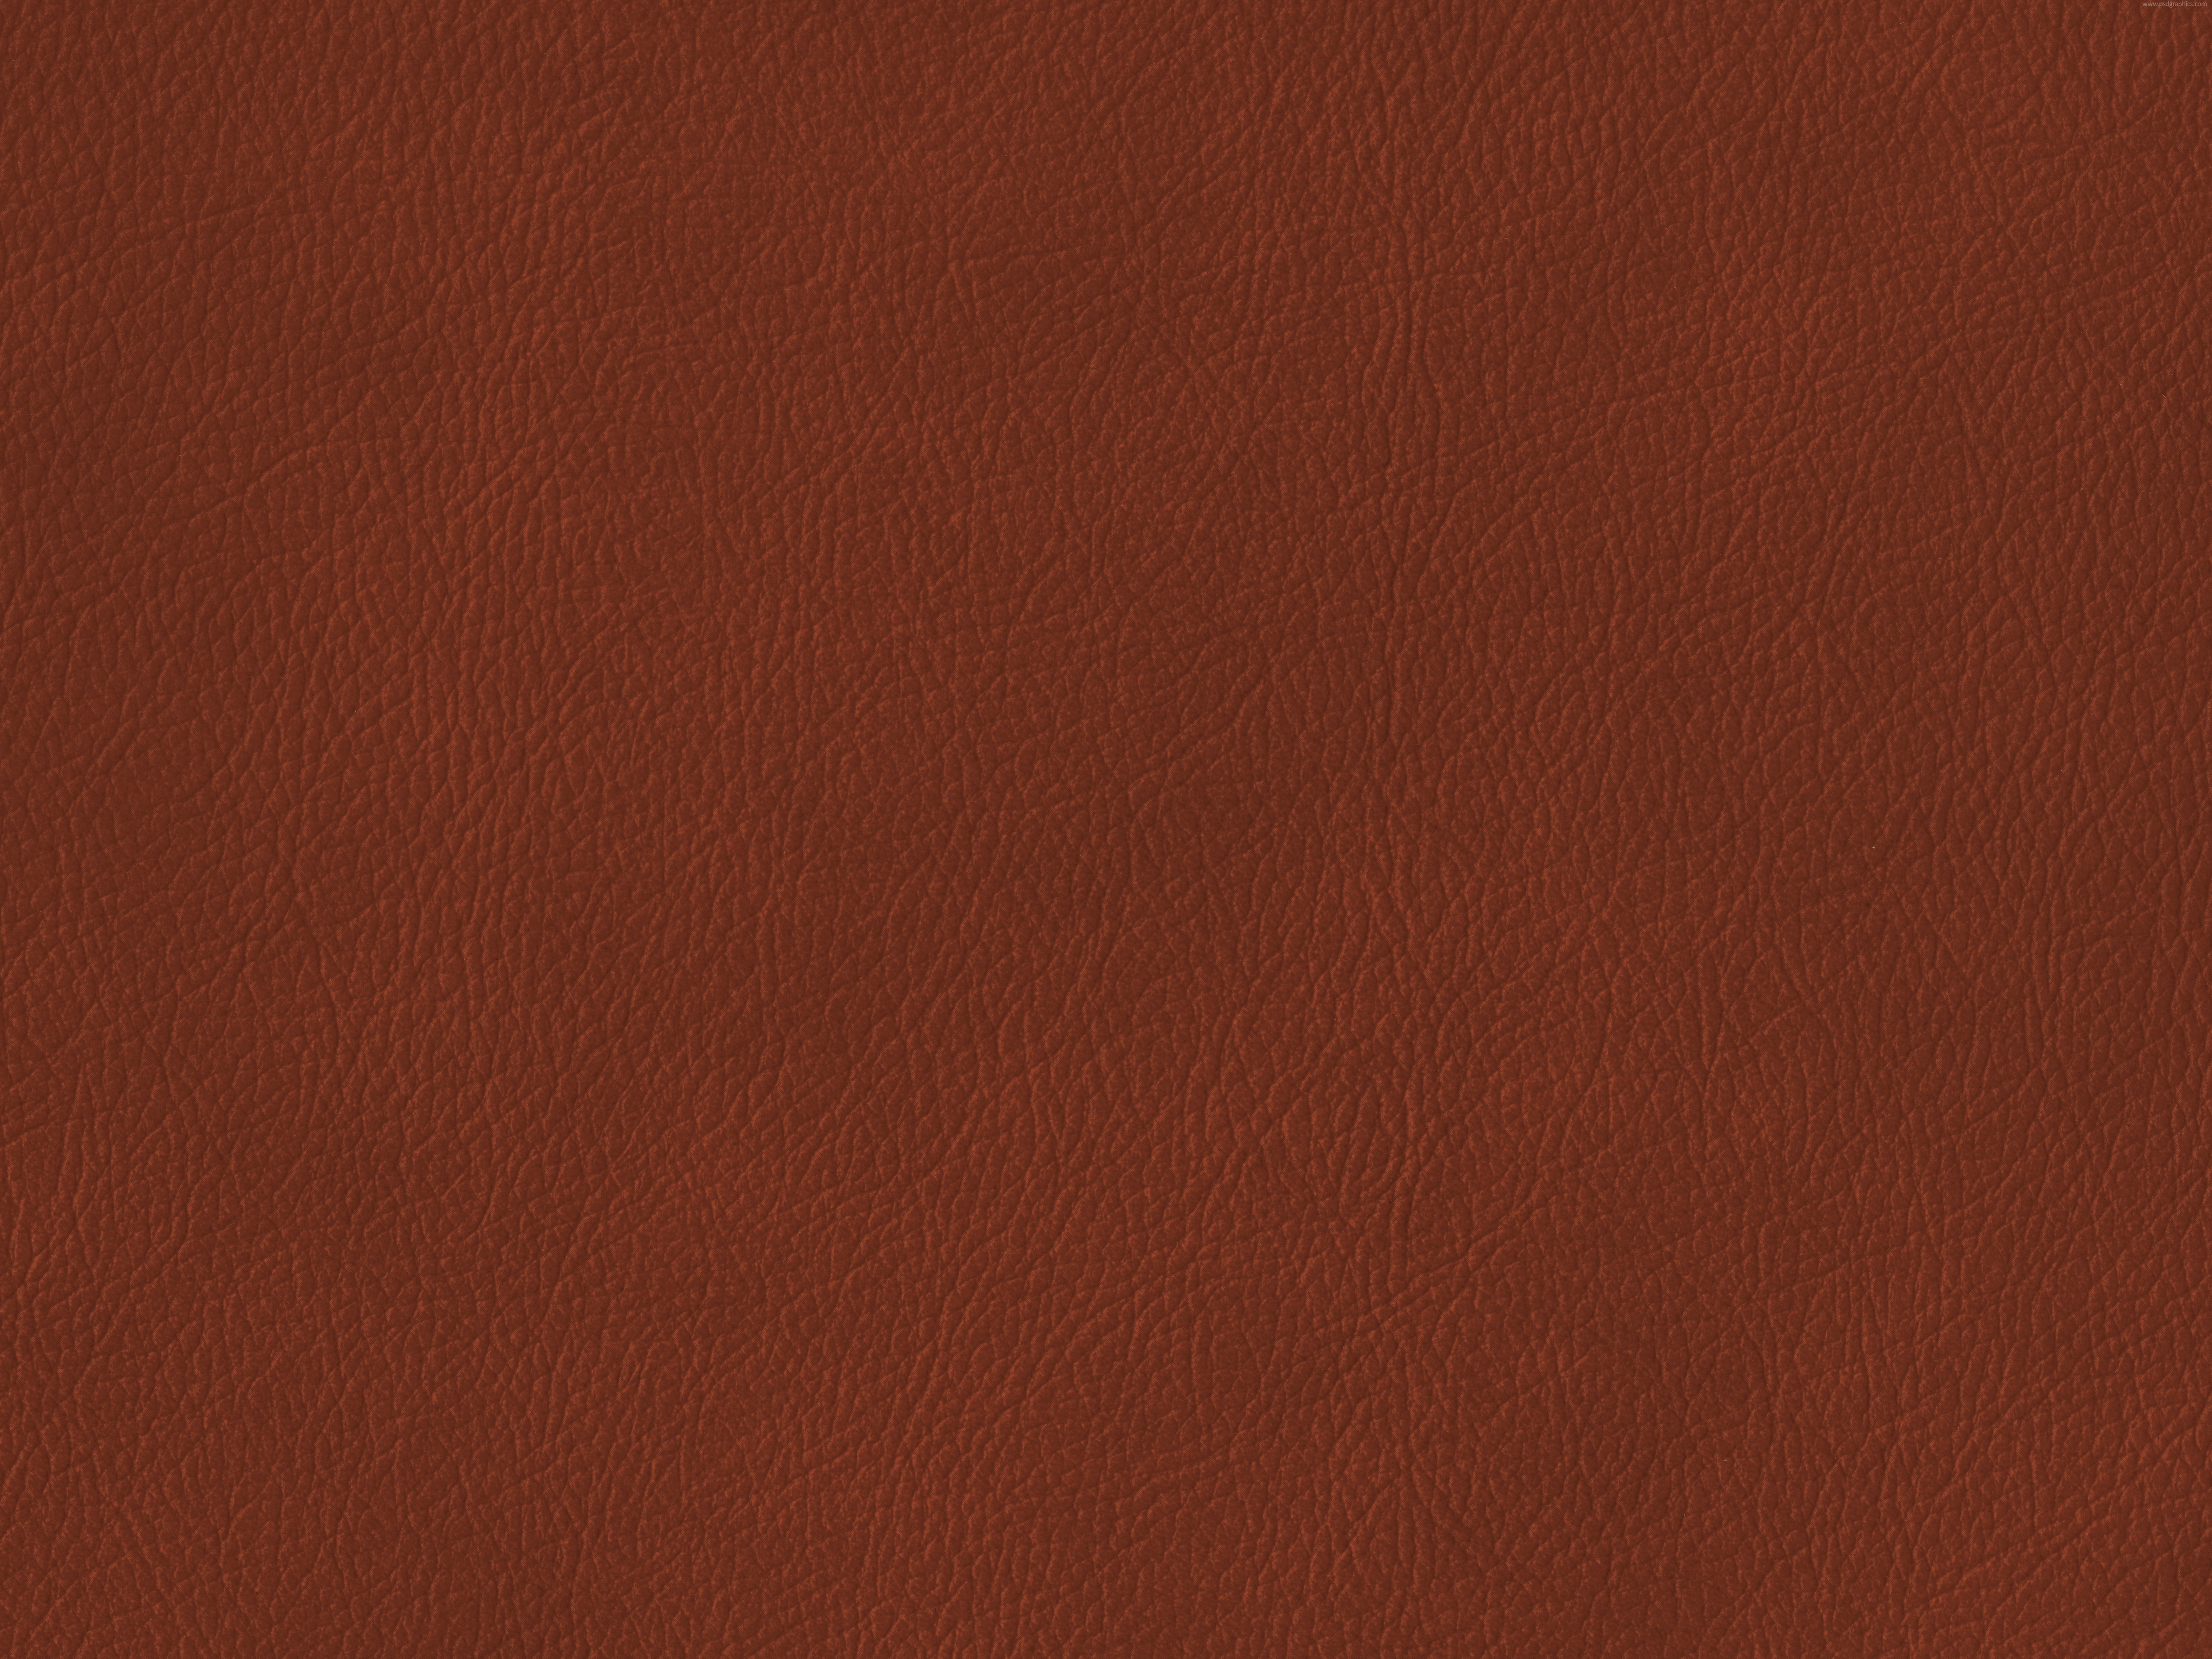 Brown HD wallpapers, Desktop wallpaper - most viewed